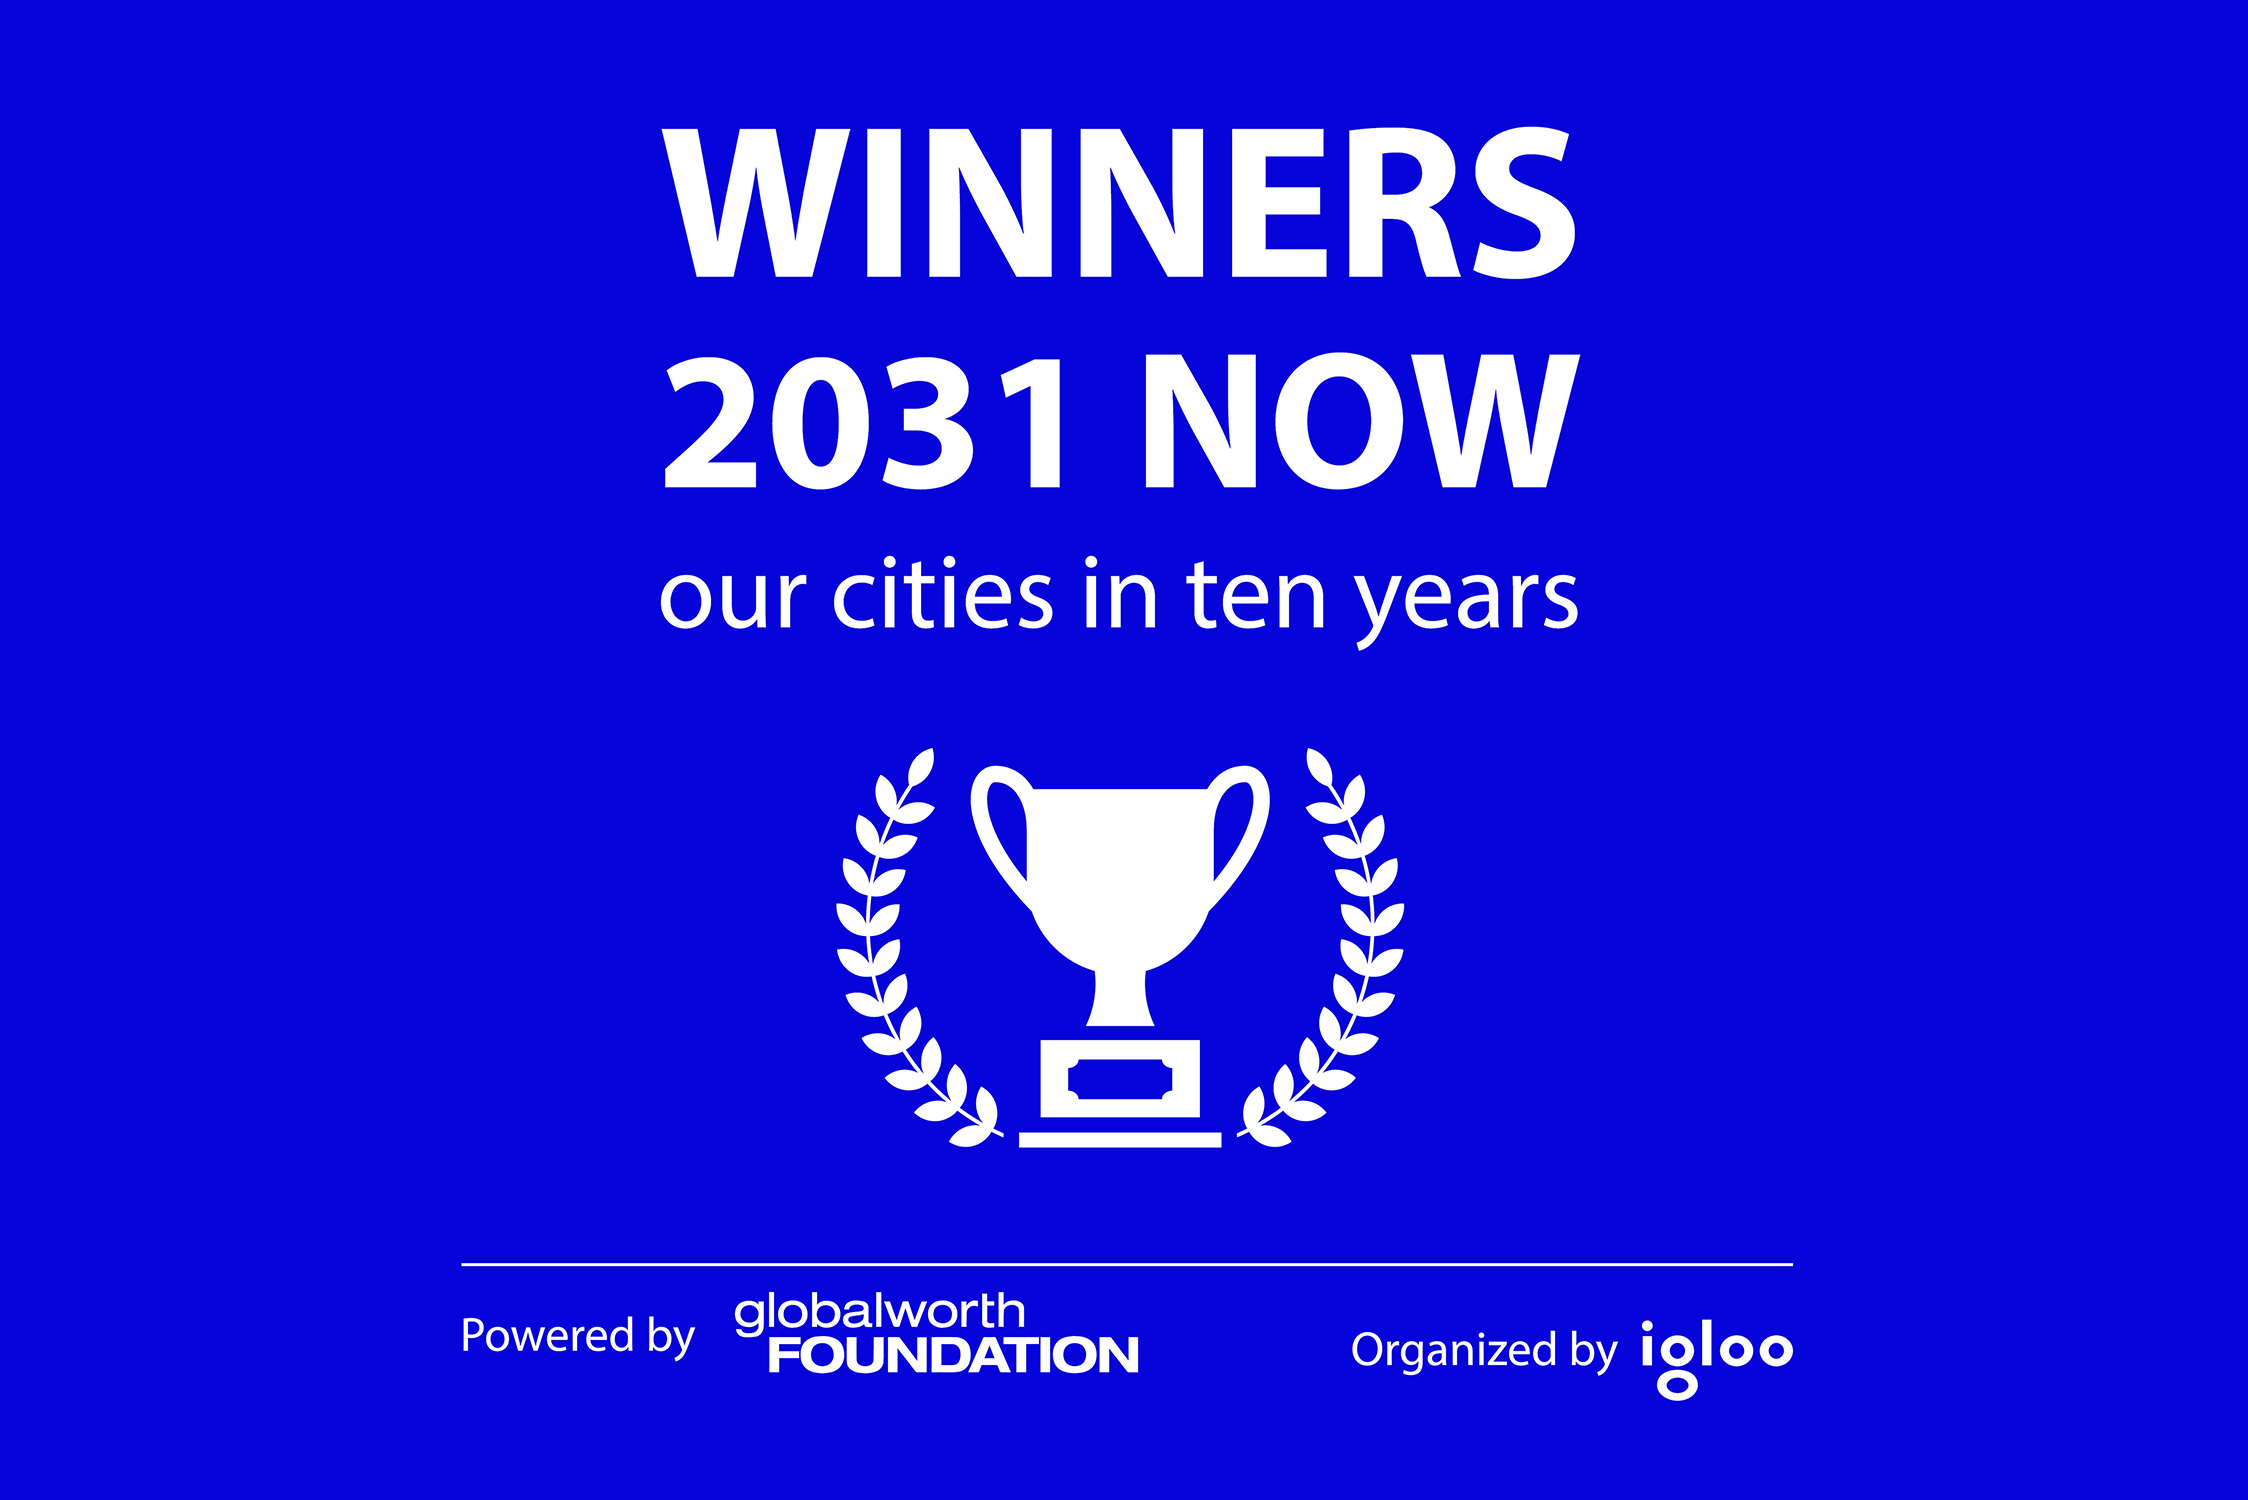 Fundația Globalworth și Igloo anunță câștigătorii competiției 2031 NOW_our cities in 10 years